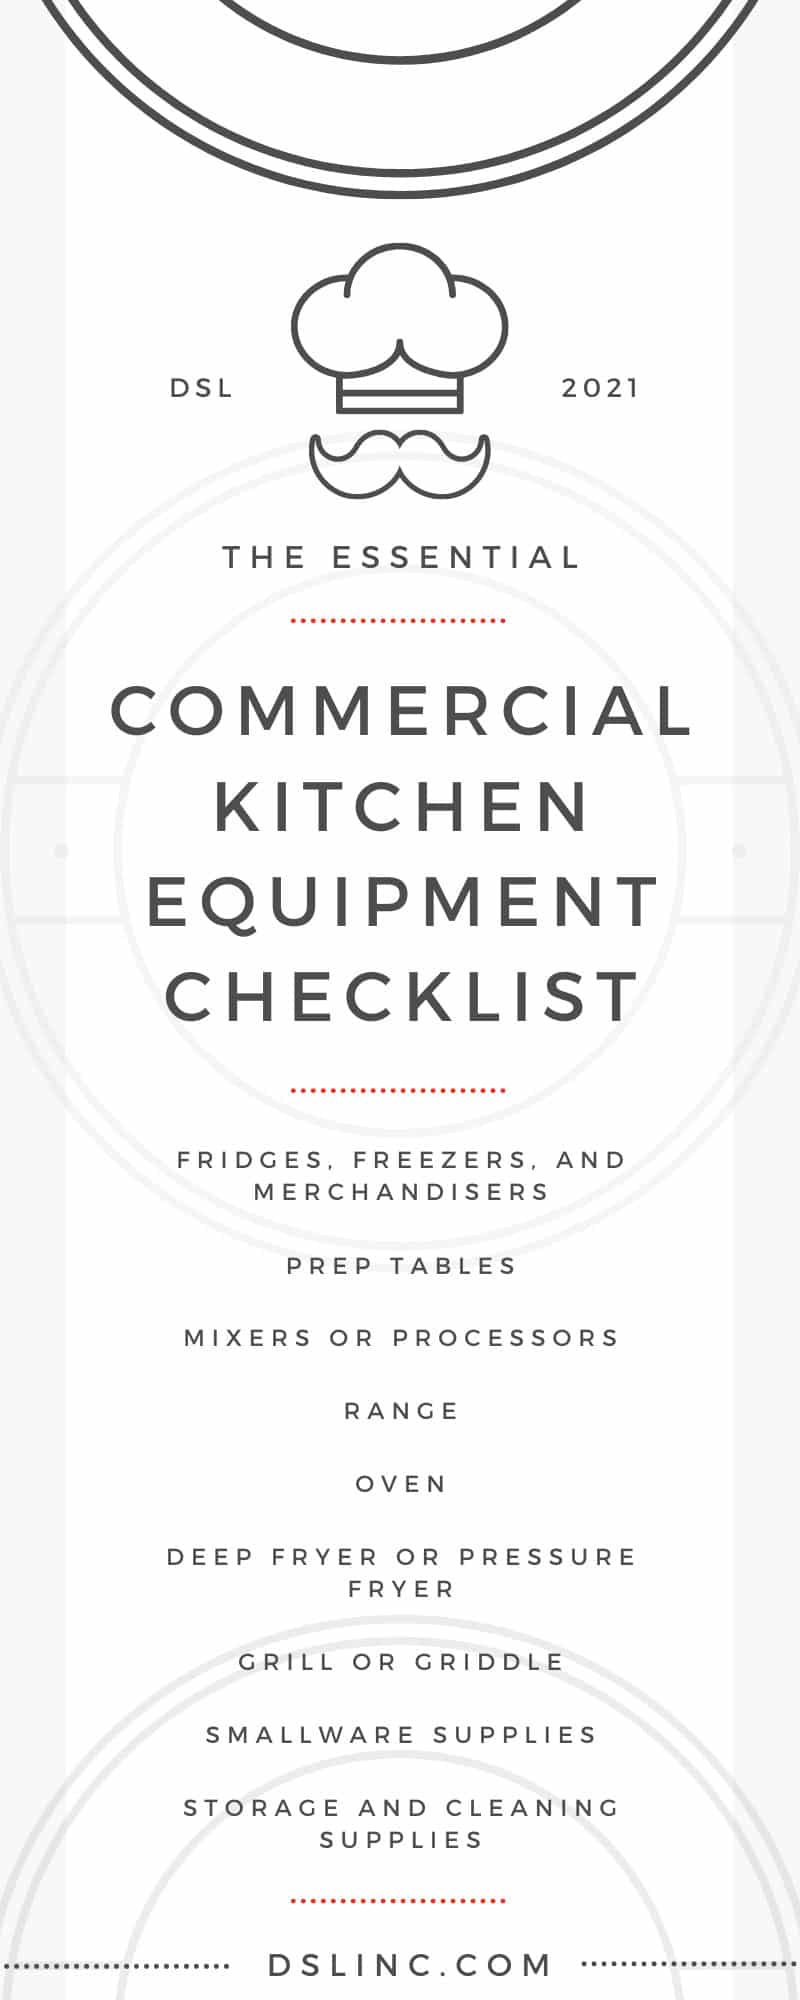 The Essential Commercial Kitchen Equipment Checklist